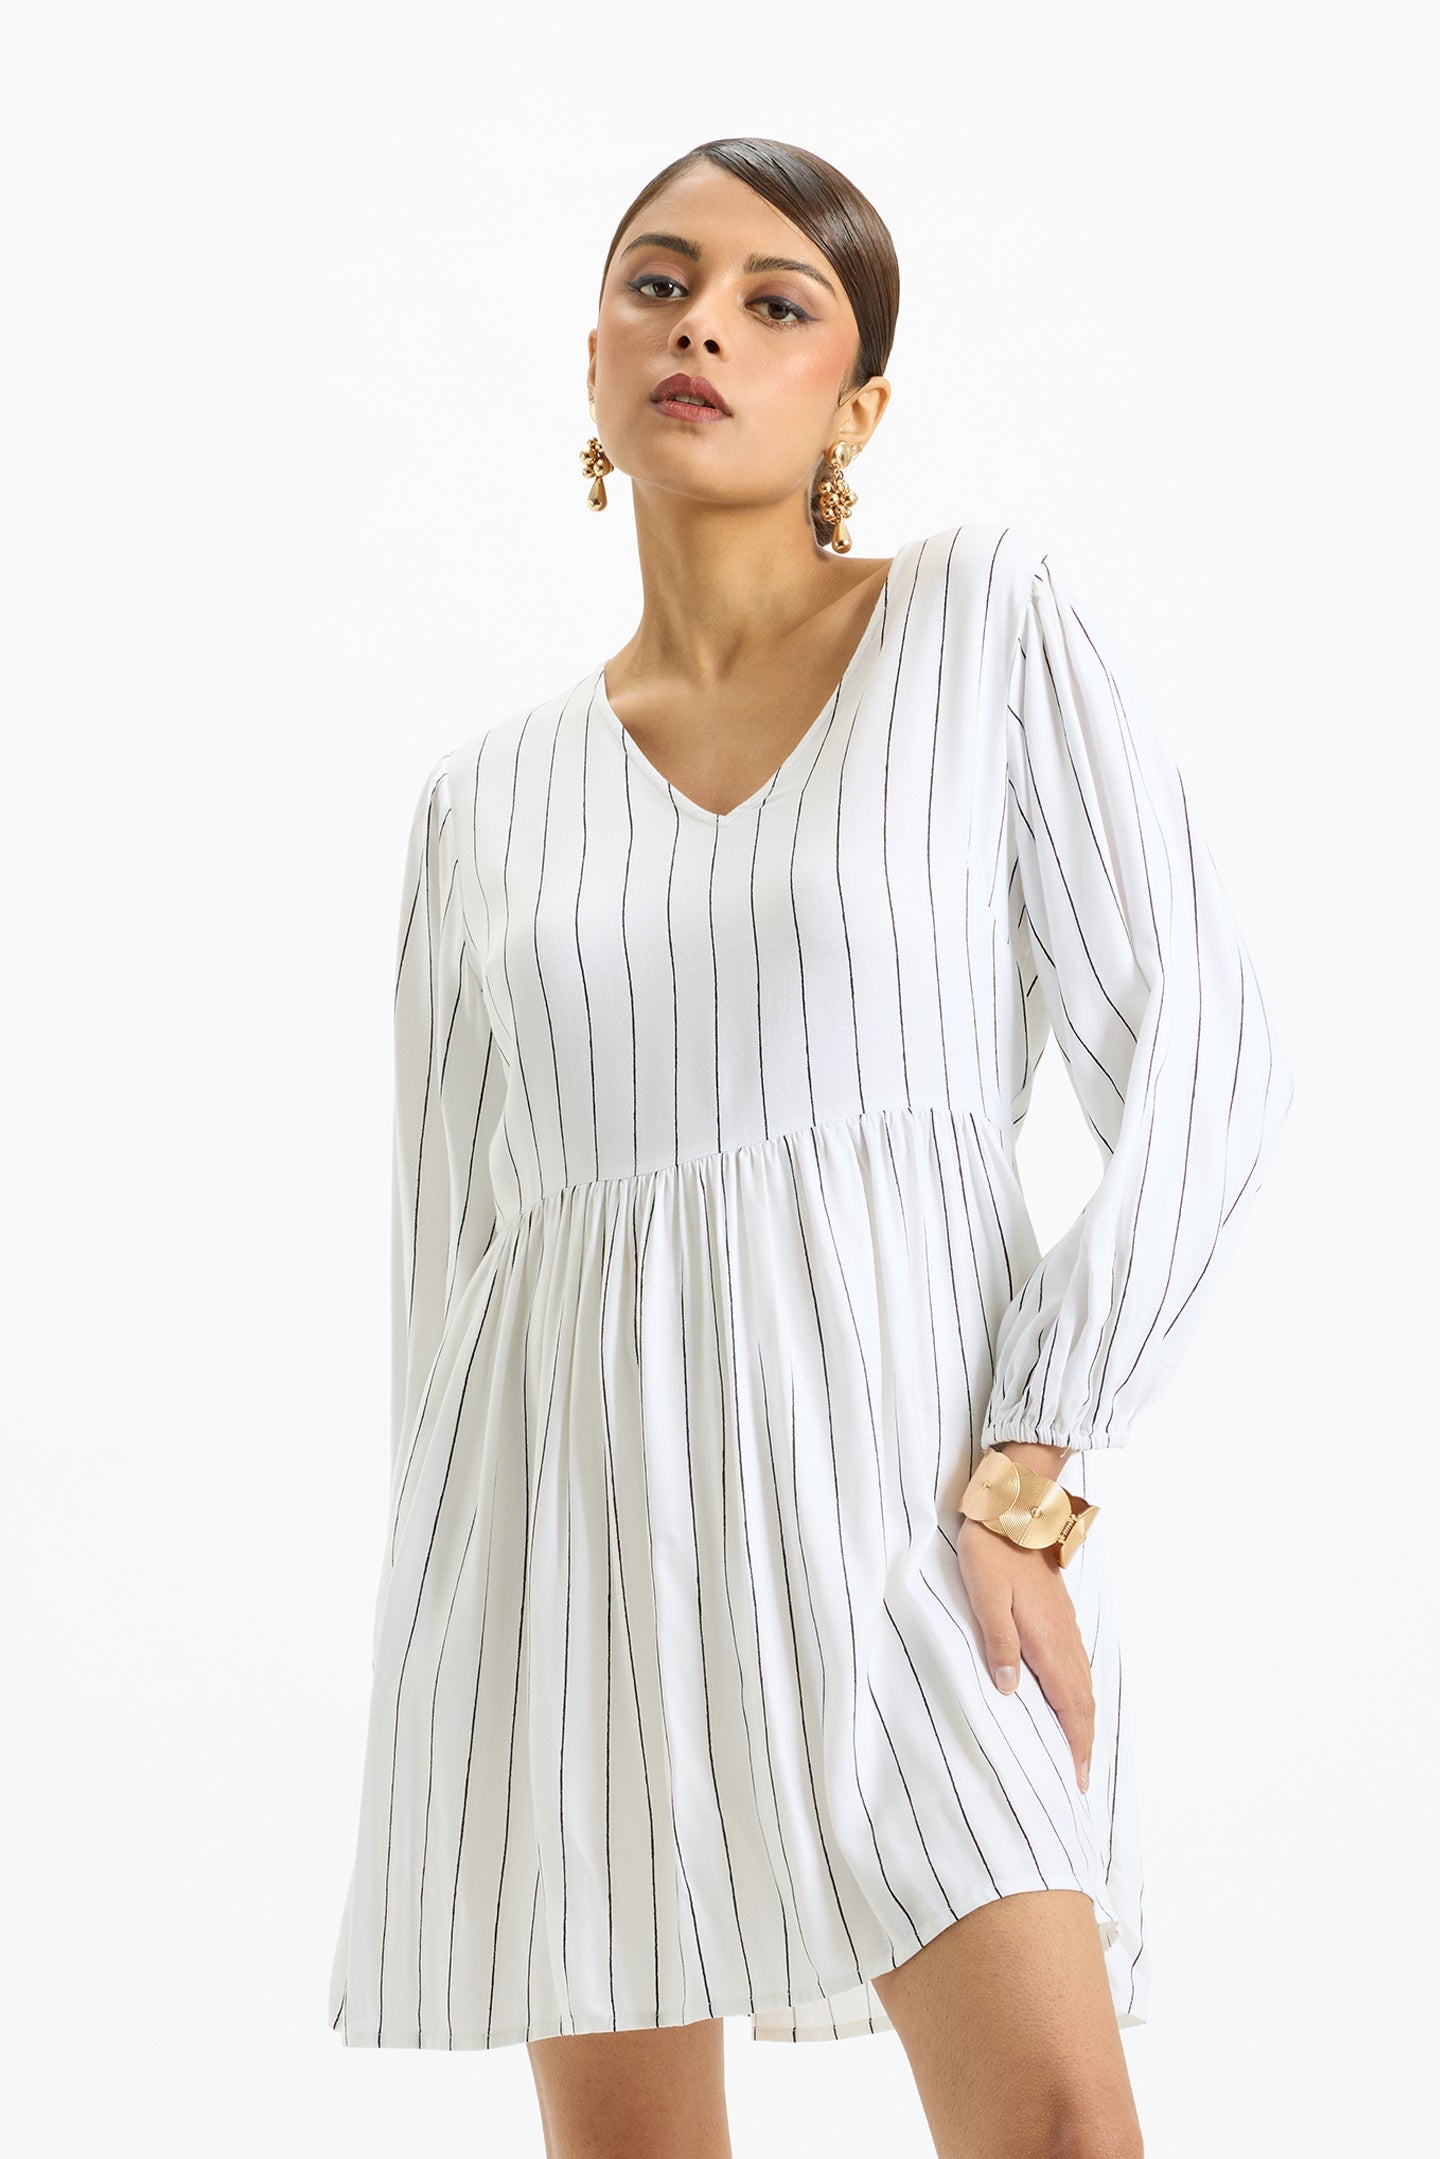 Adira|Stripe-tastic Back Drama Dress with Pockets